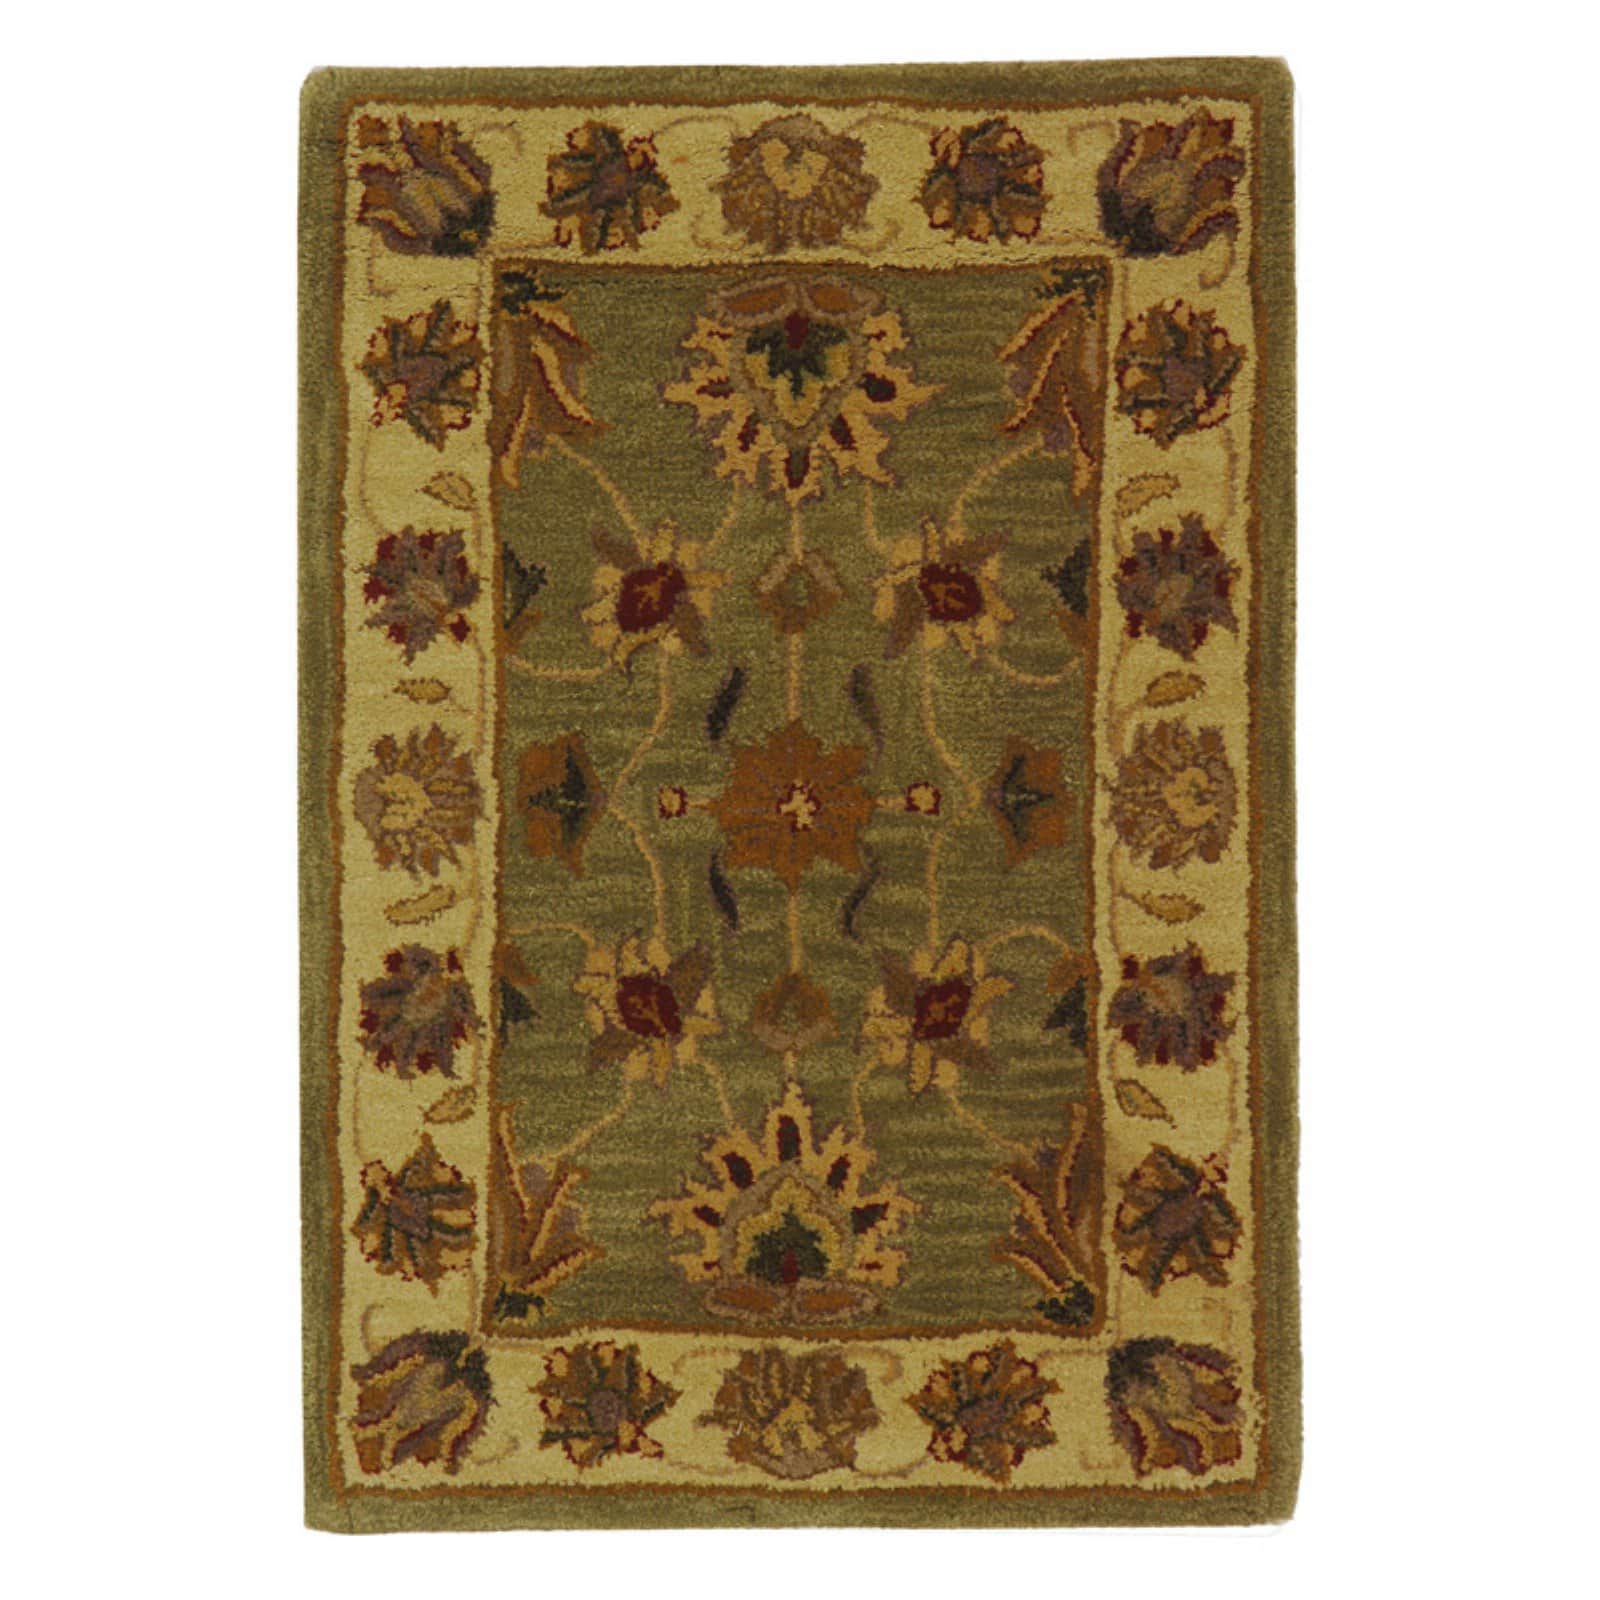 SAFAVIEH Heritage Regis Traditional Wool Area Rug, Green/Gold, 9'6" x 13'6" - image 2 of 10